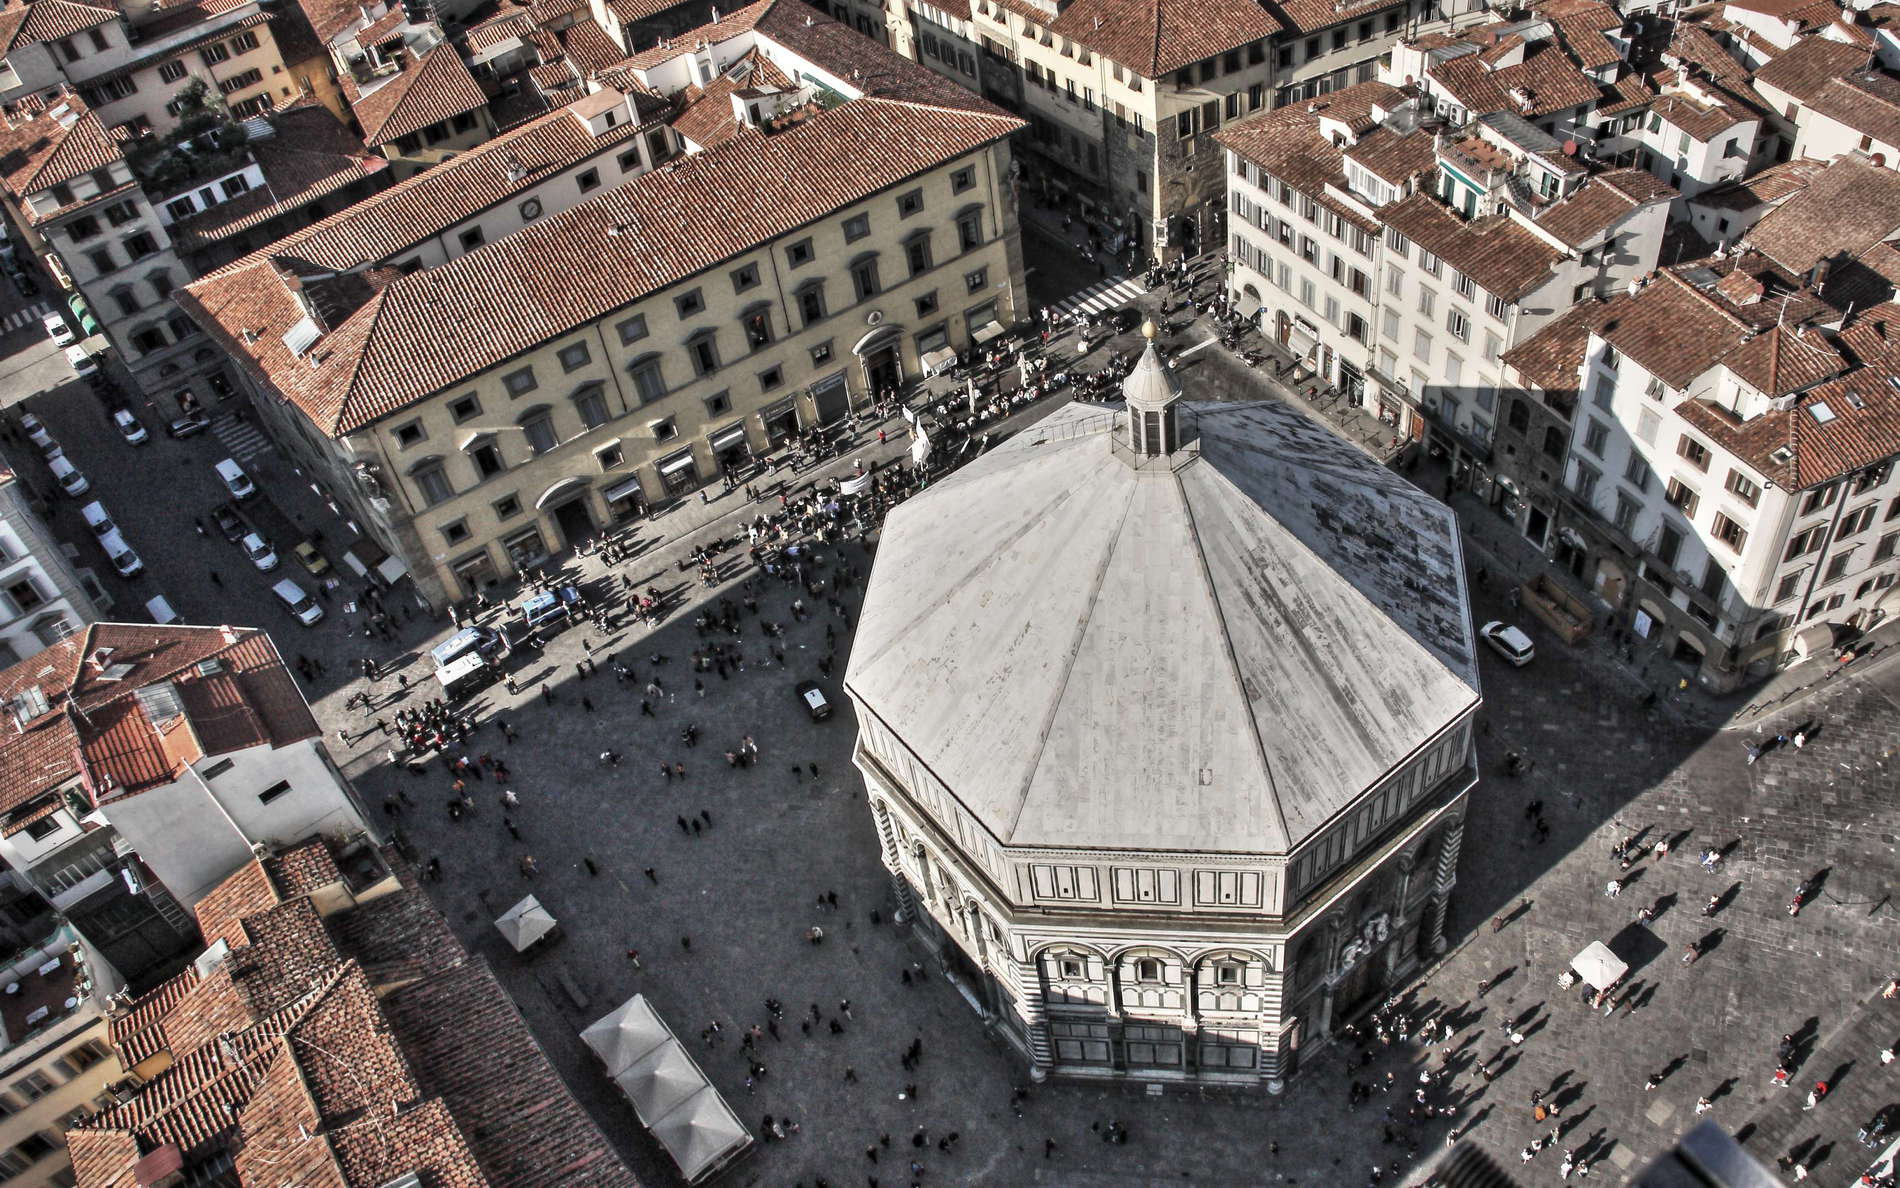 Firenze | Piazza del Duomo with baptisterium